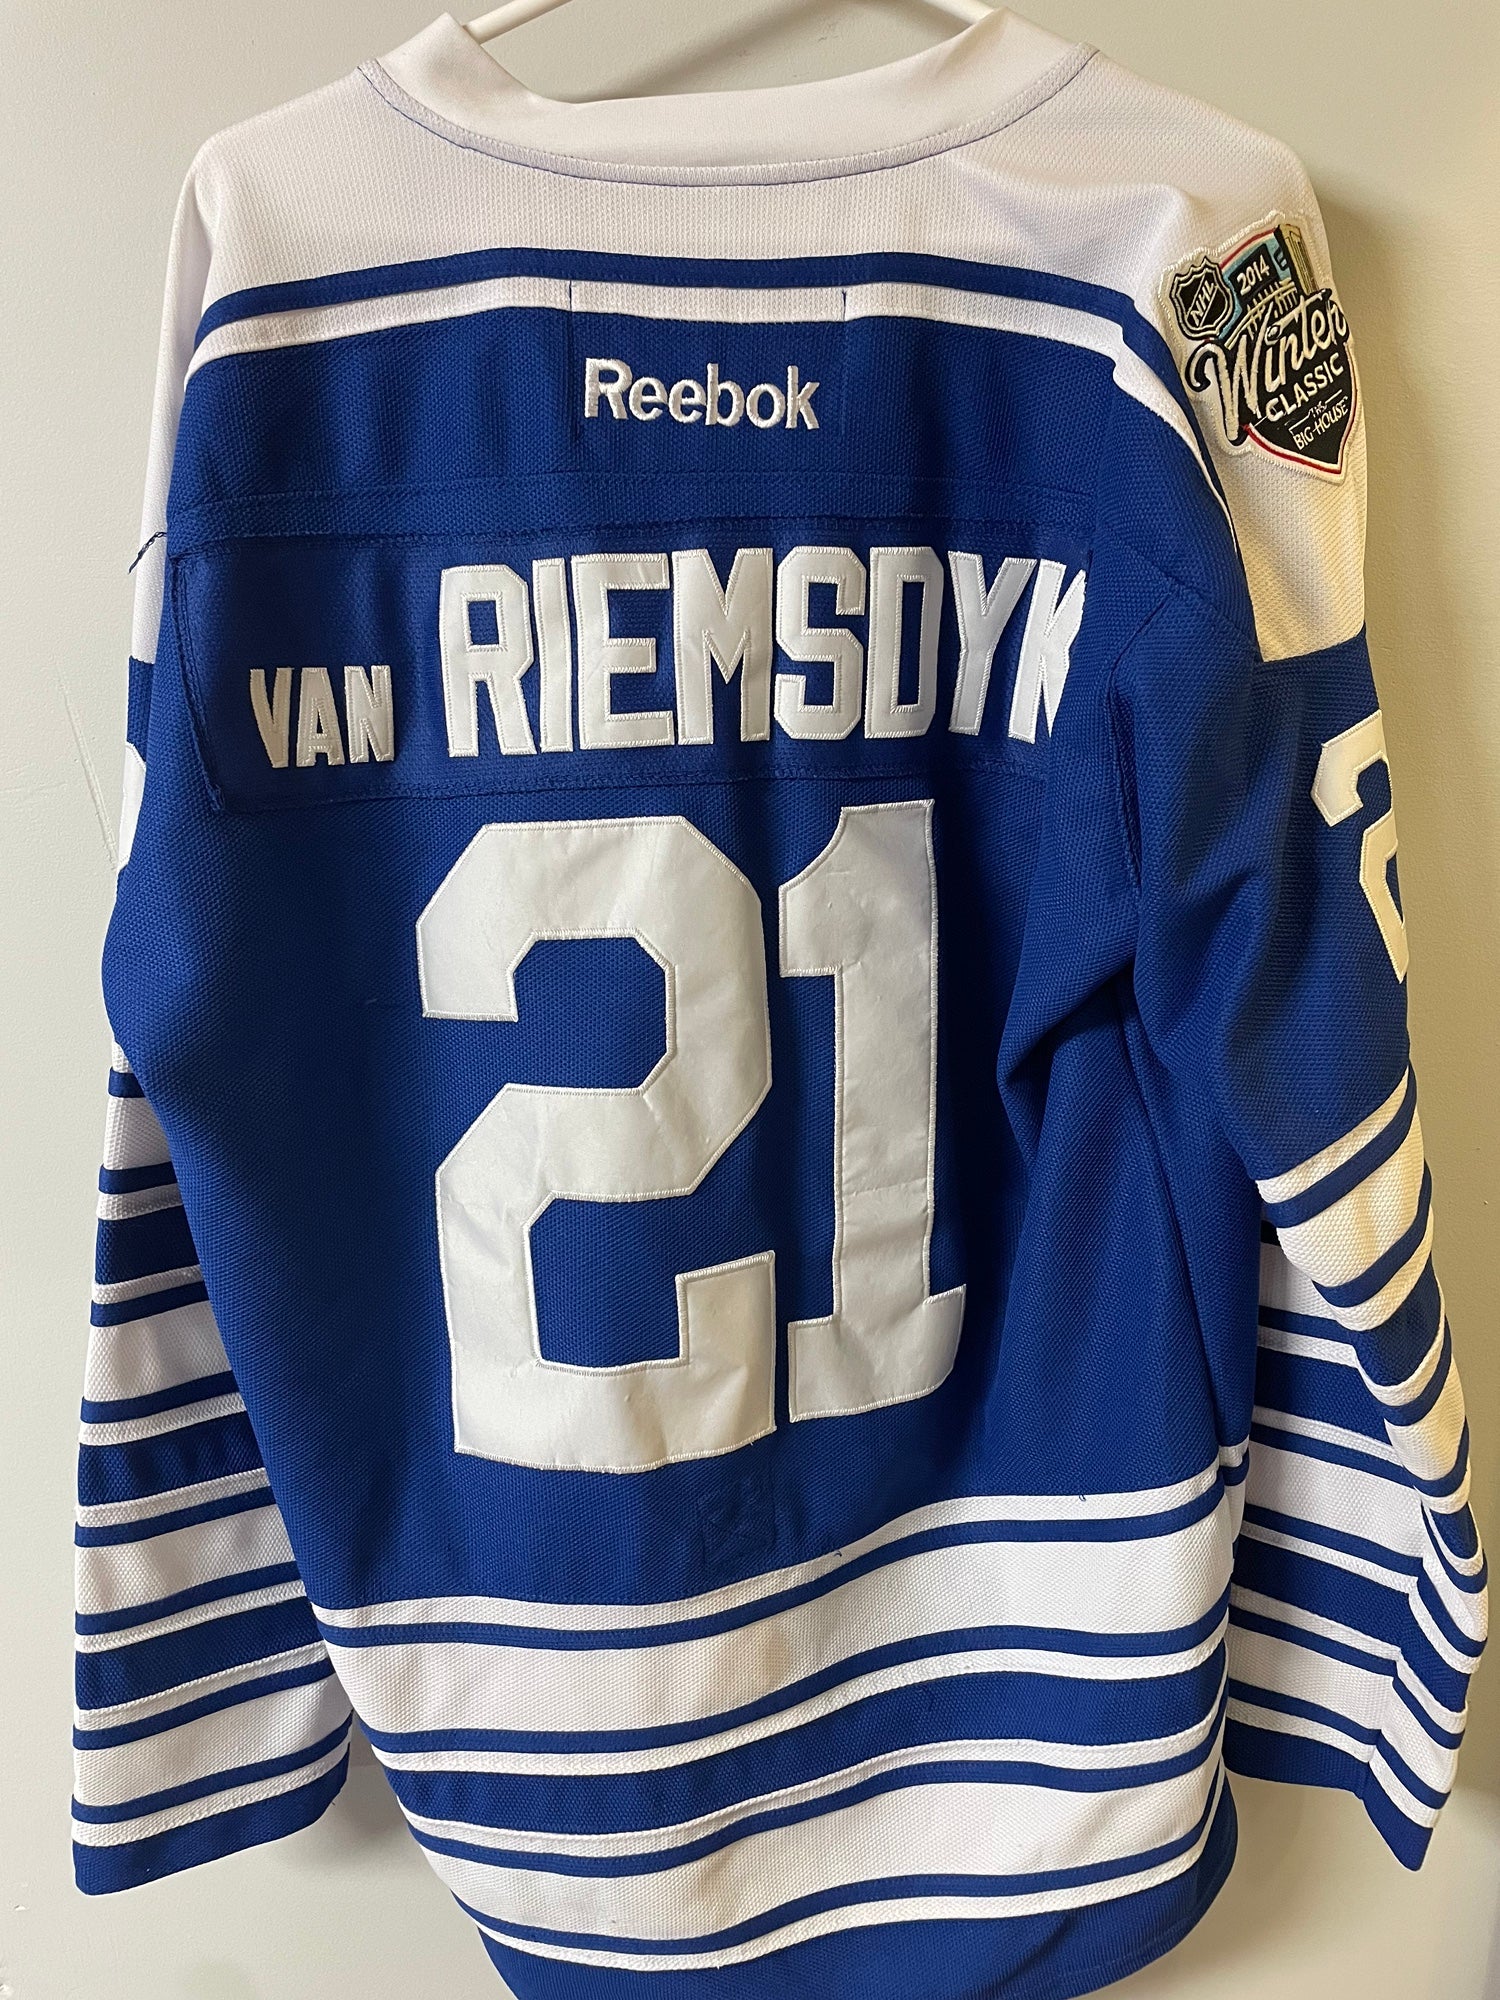 Toronto Maple Leafs 2014 Winter Classic Jersey James Van Riemsdyk